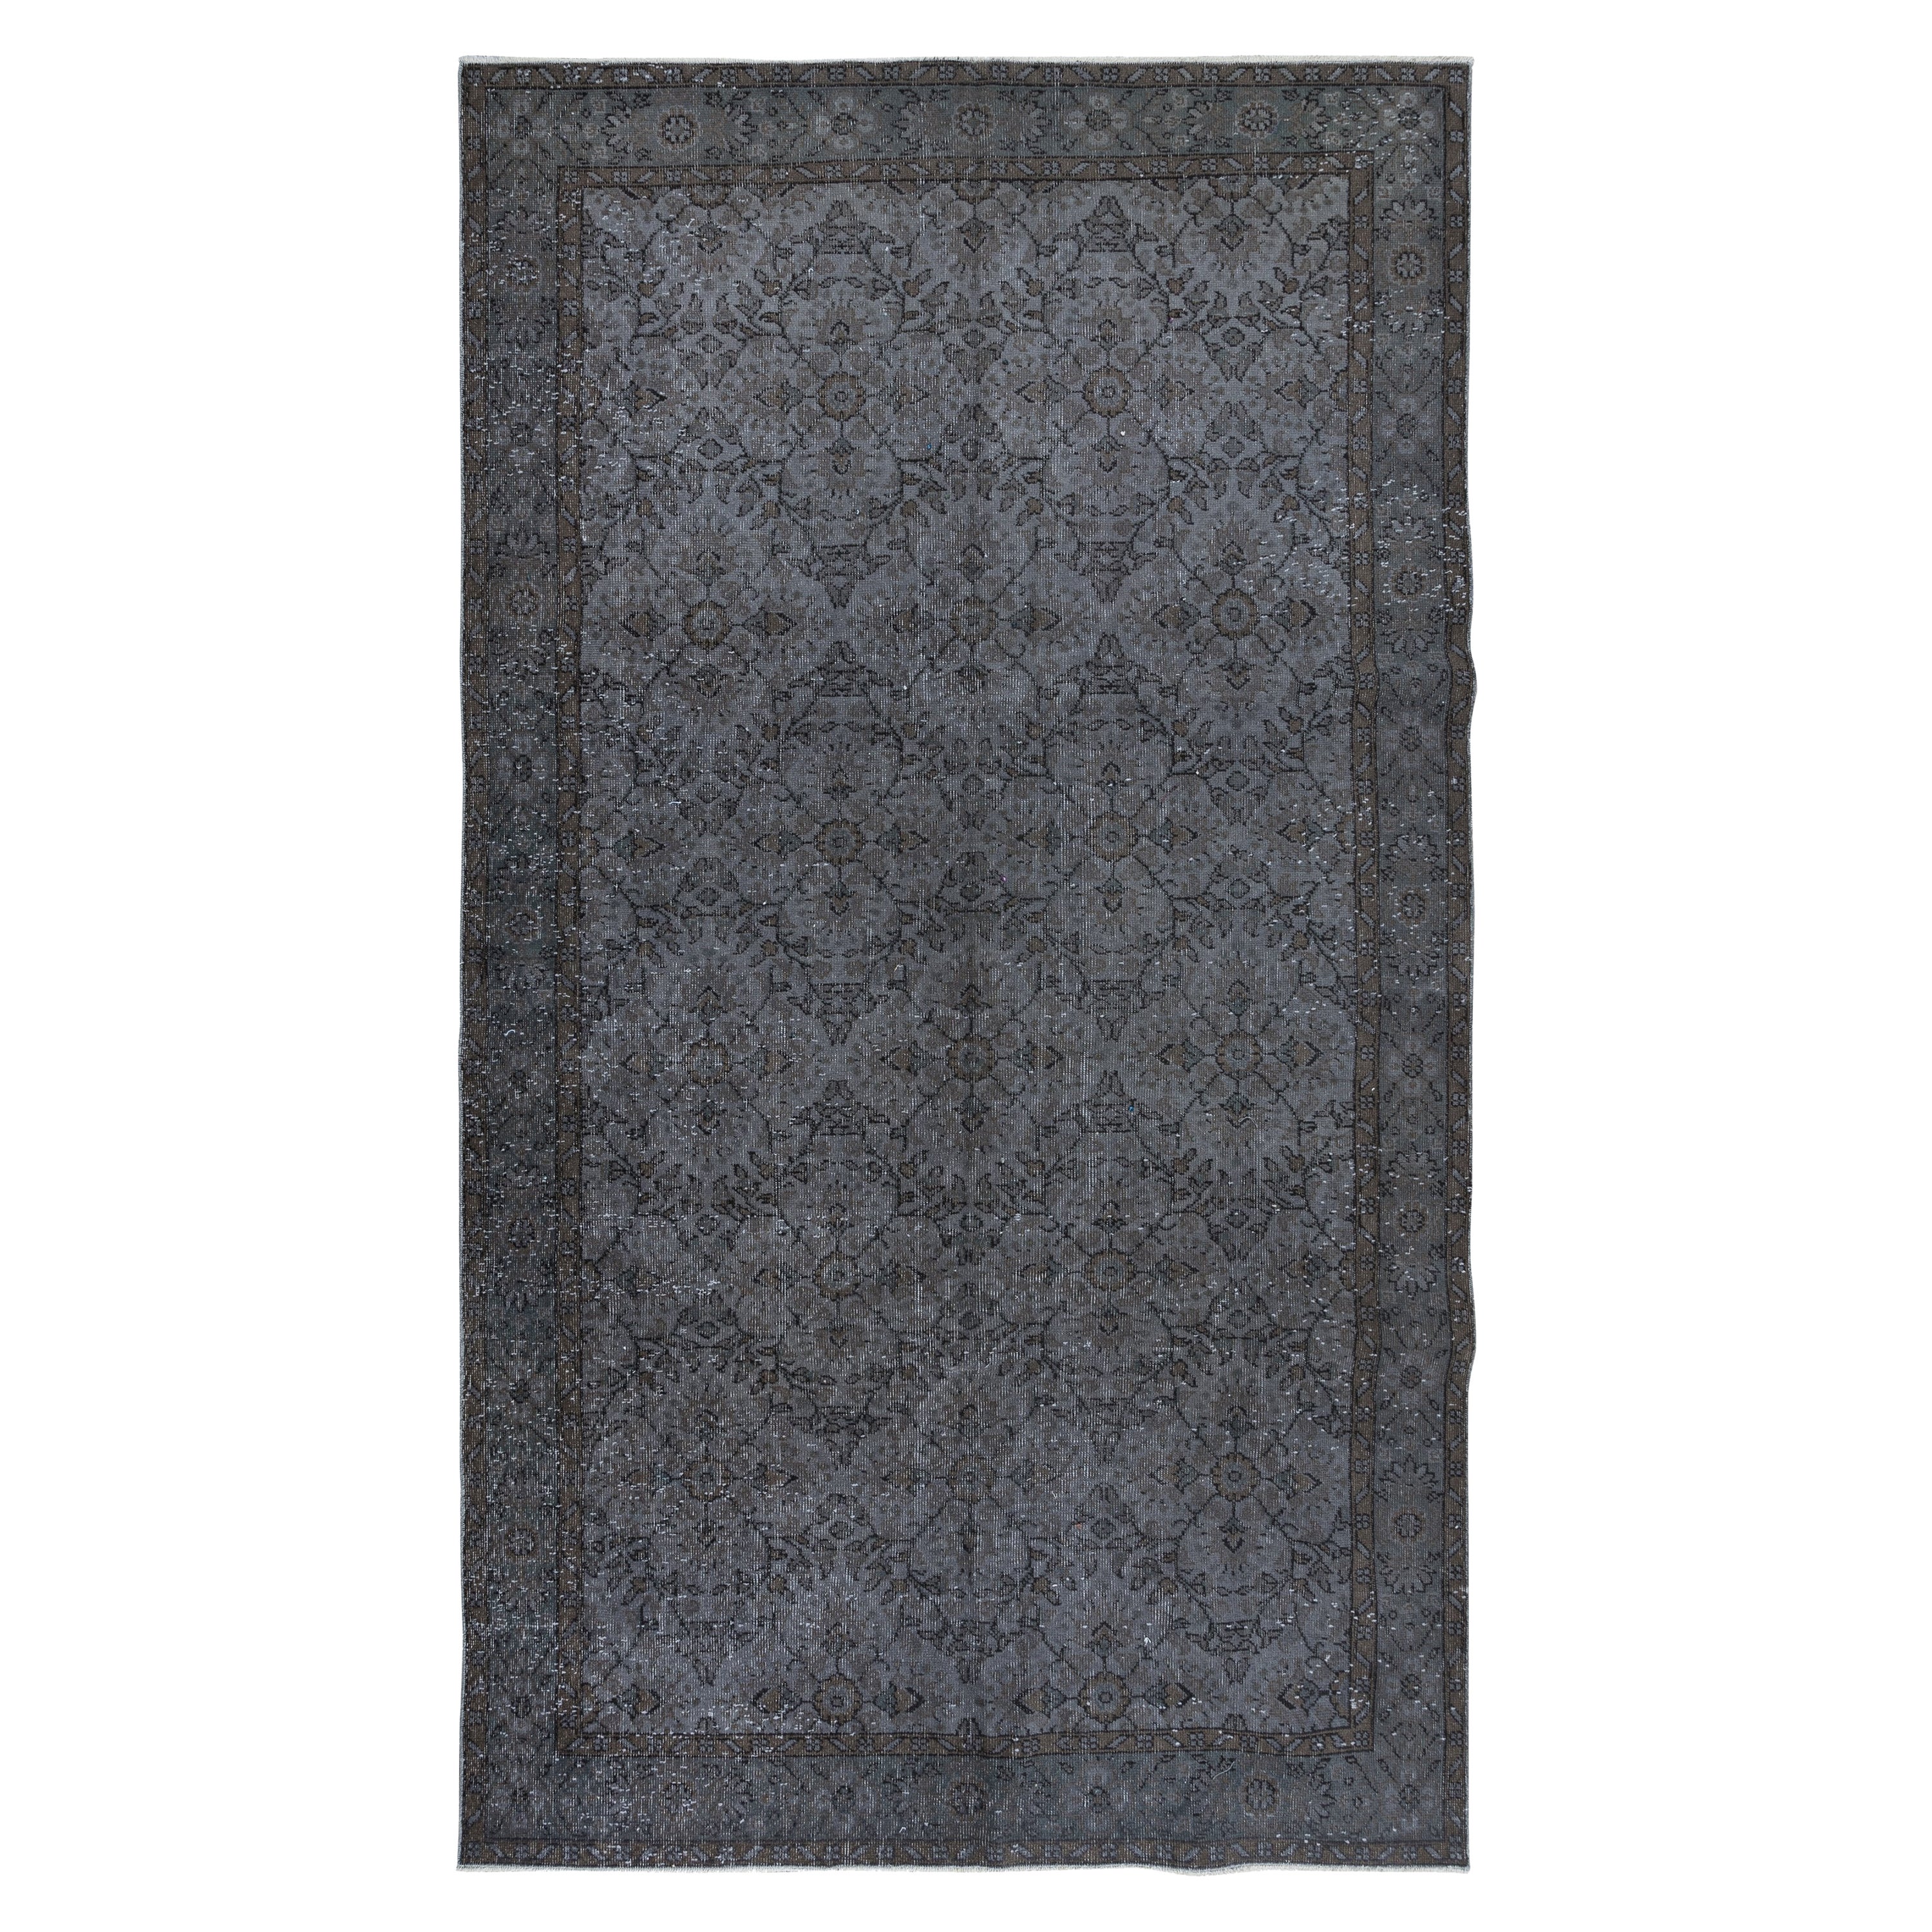 5.6x9.7 Ft Modern Turkish Rug in Gray, Decorative Handmade Floral Design Carpet